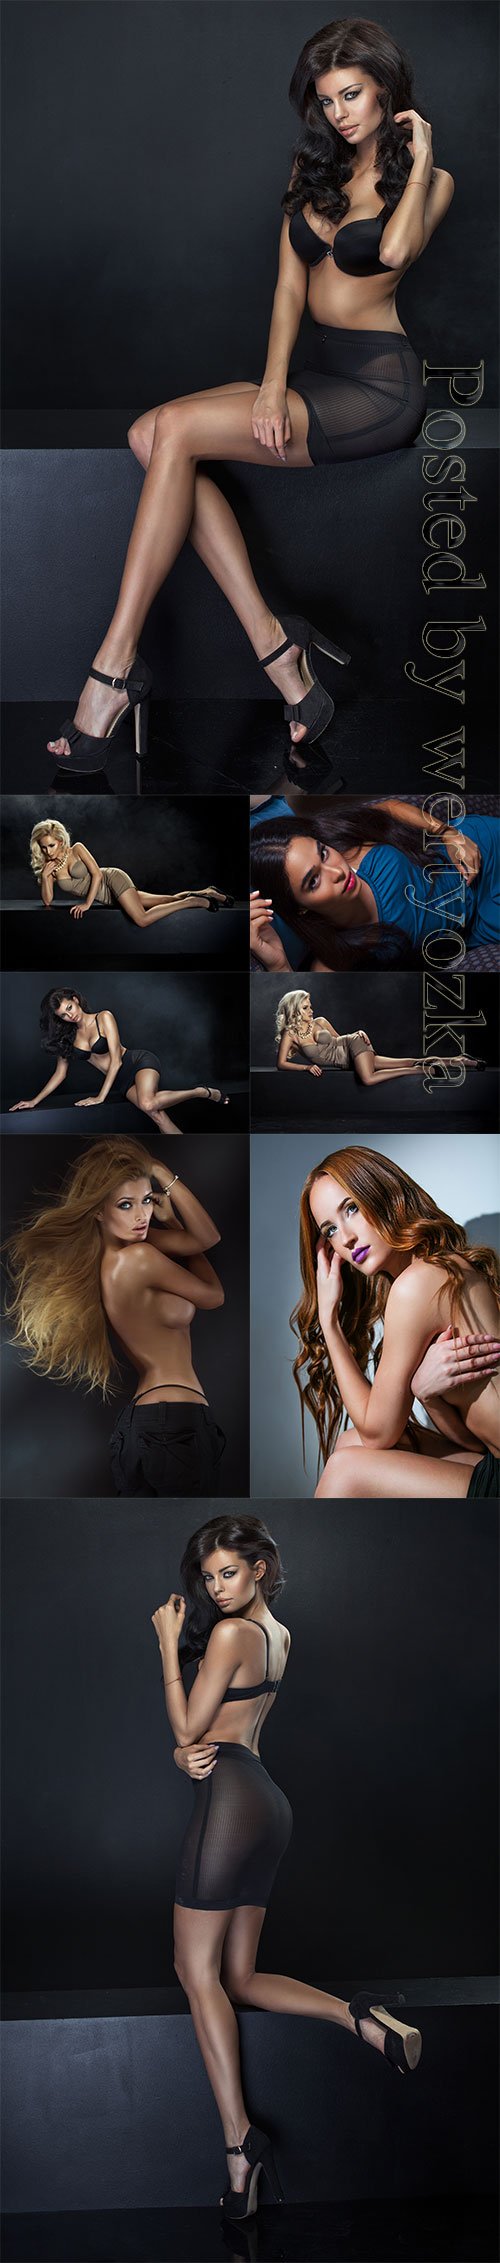 Luxury women in lingerie posing stock photo vol 22